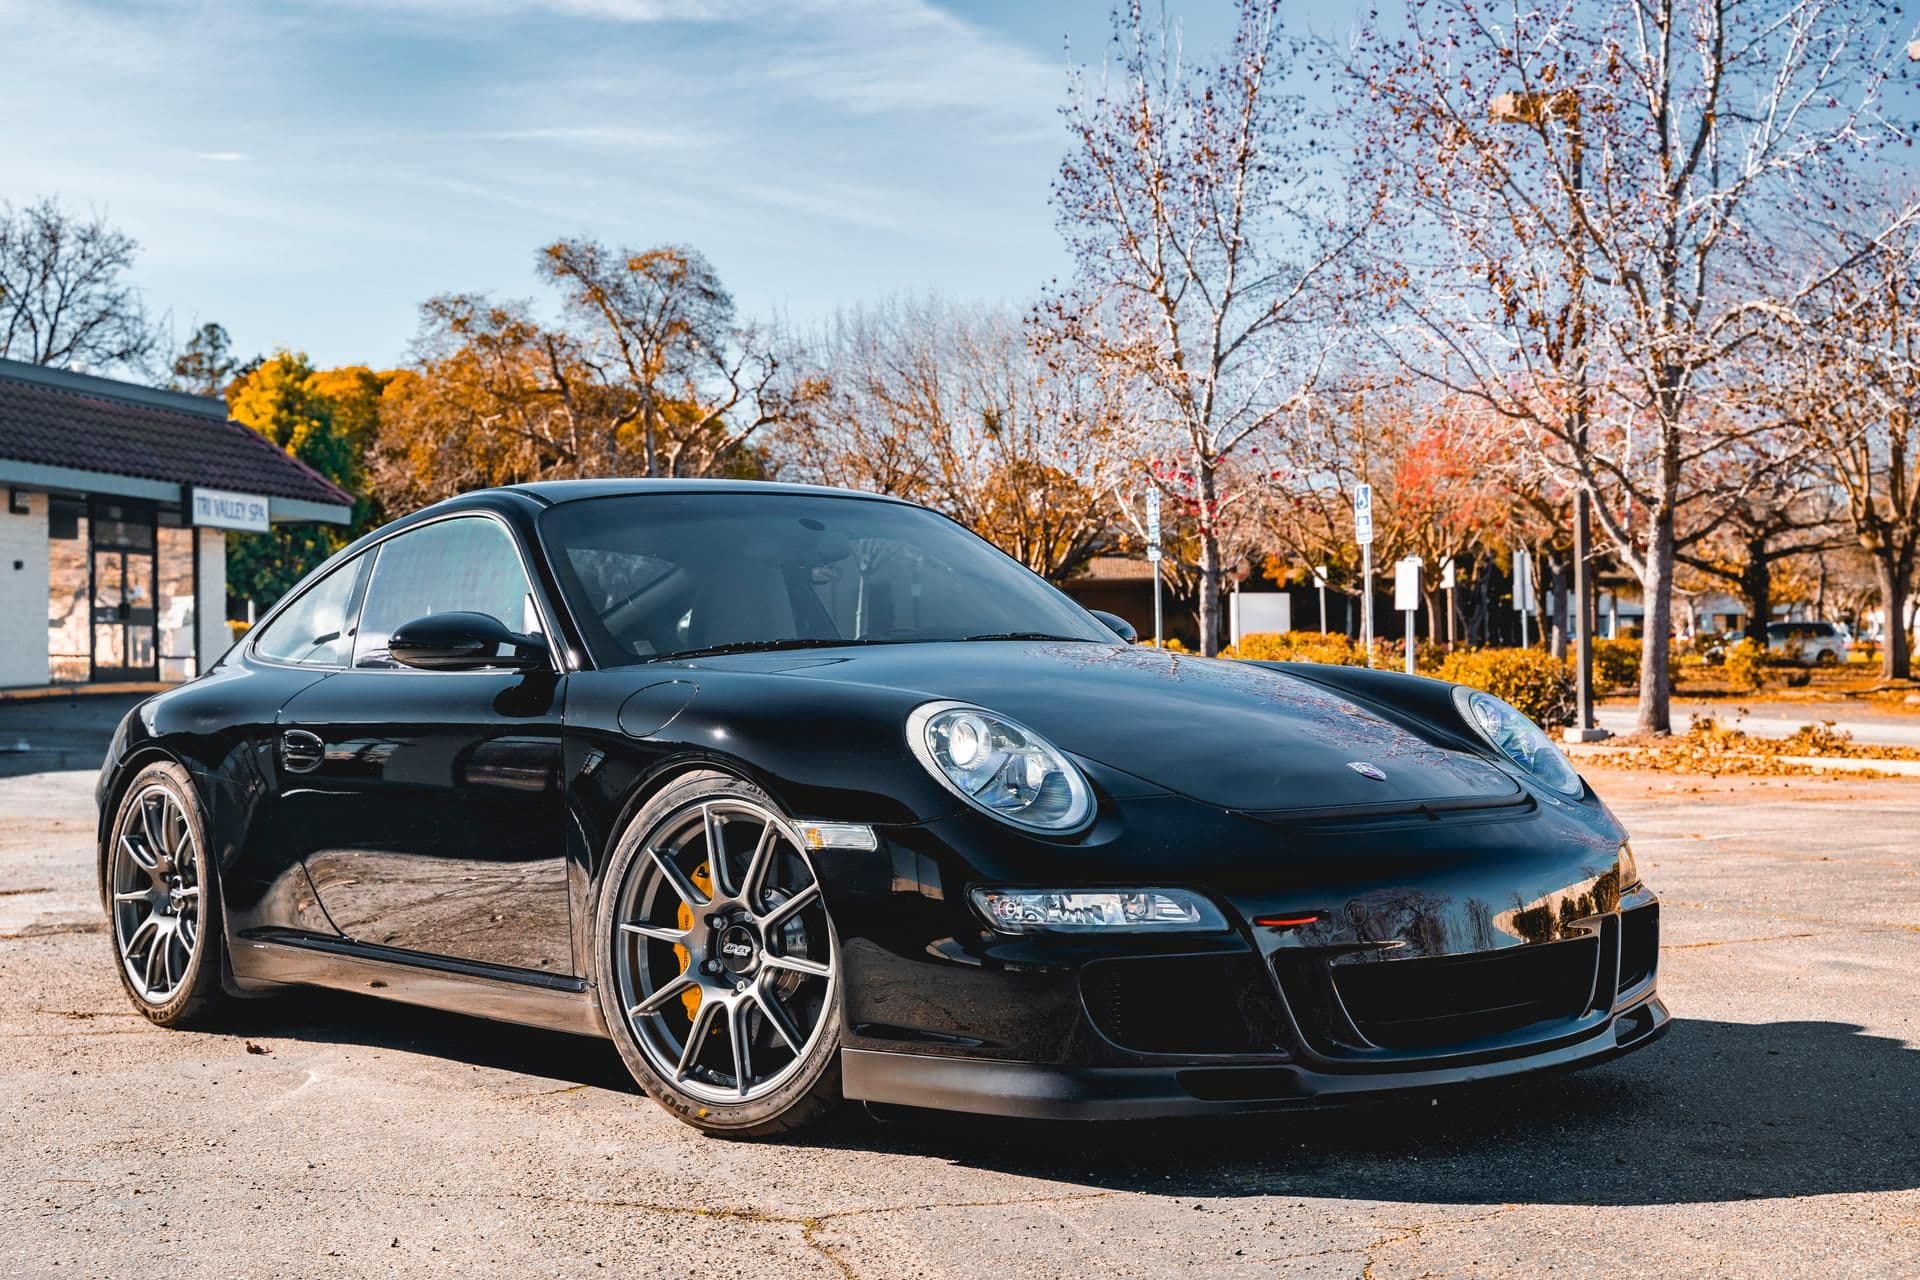 2005 - 2012 Porsche 911 - WTB: 997.1 or .2 C2S - Used - Tampa, FL 33603, United States